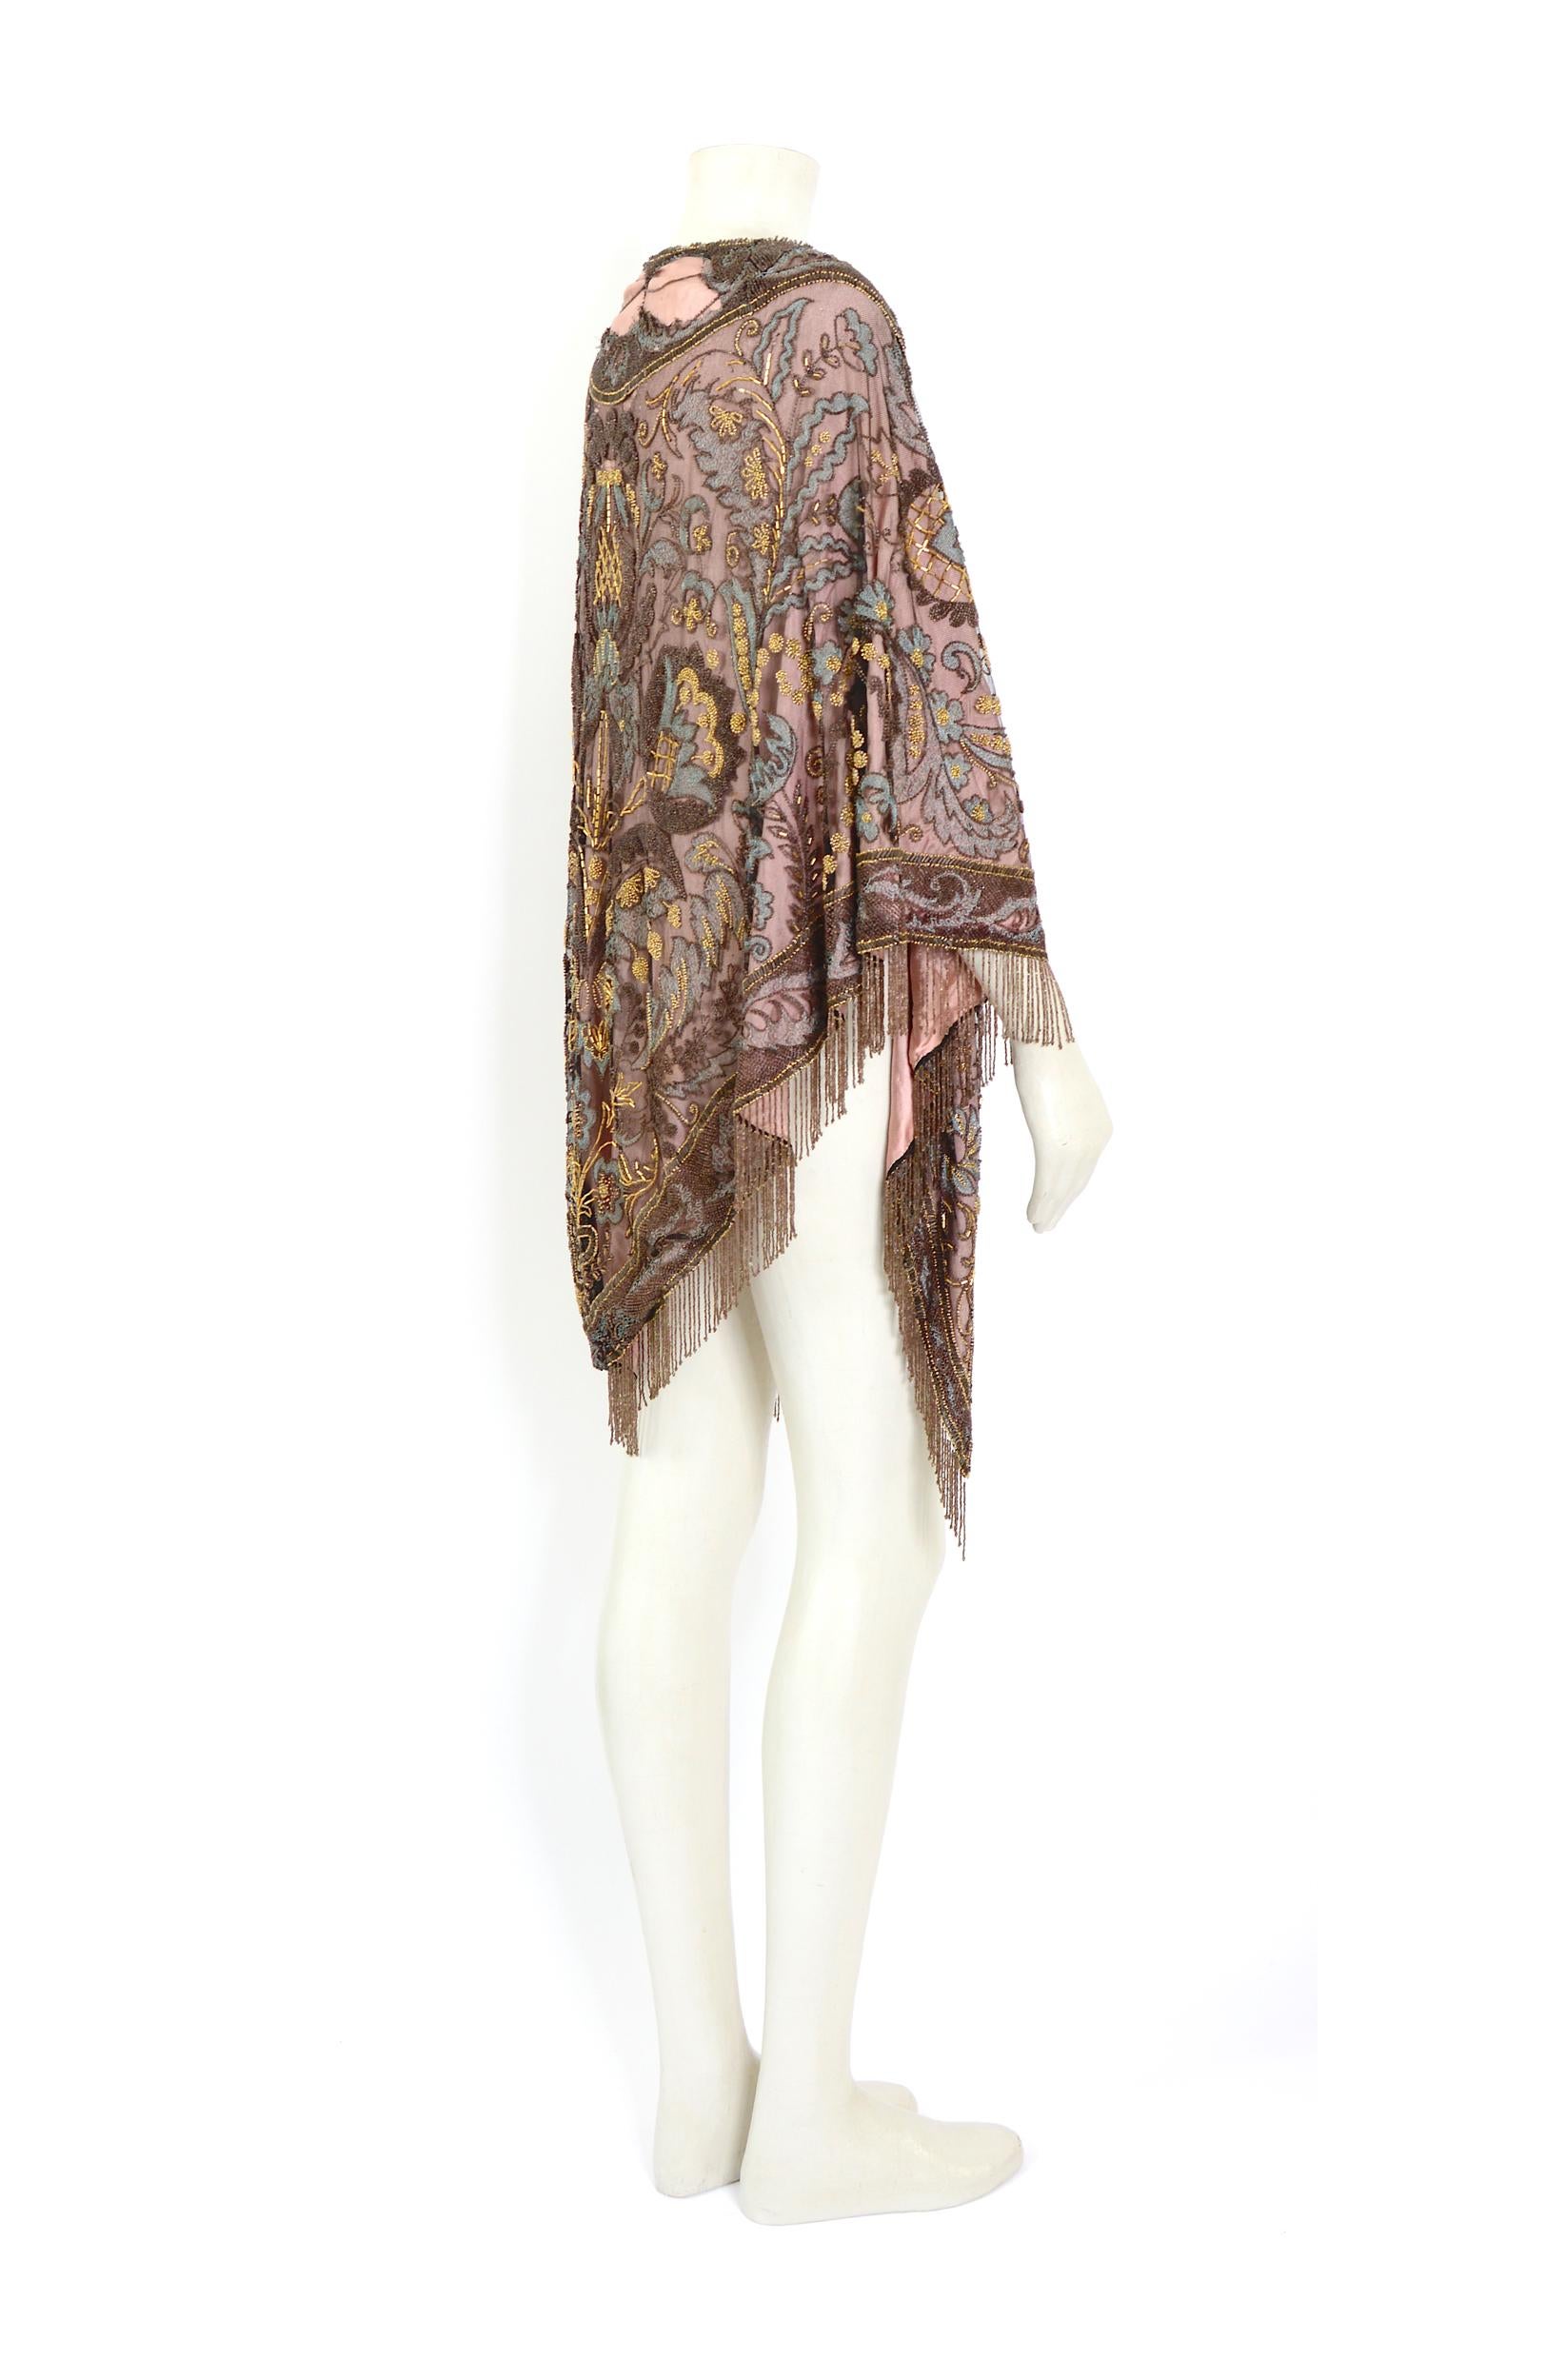 Women's Liberty & Co London Paris art nouveau museum-worthy embellished beaded scarf  For Sale